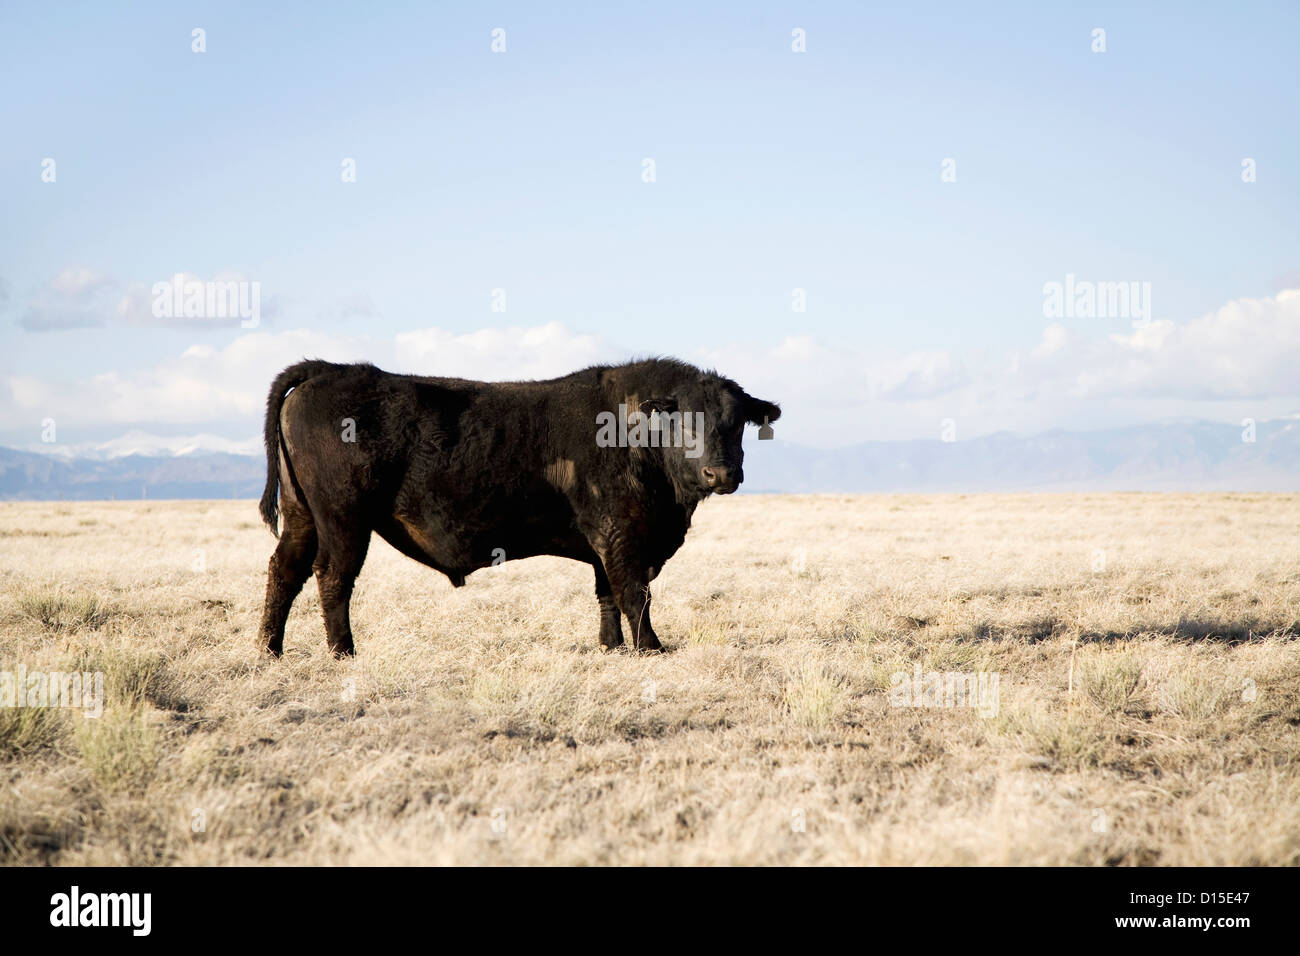 USA, Colorado, Bull standing in field Stock Photo